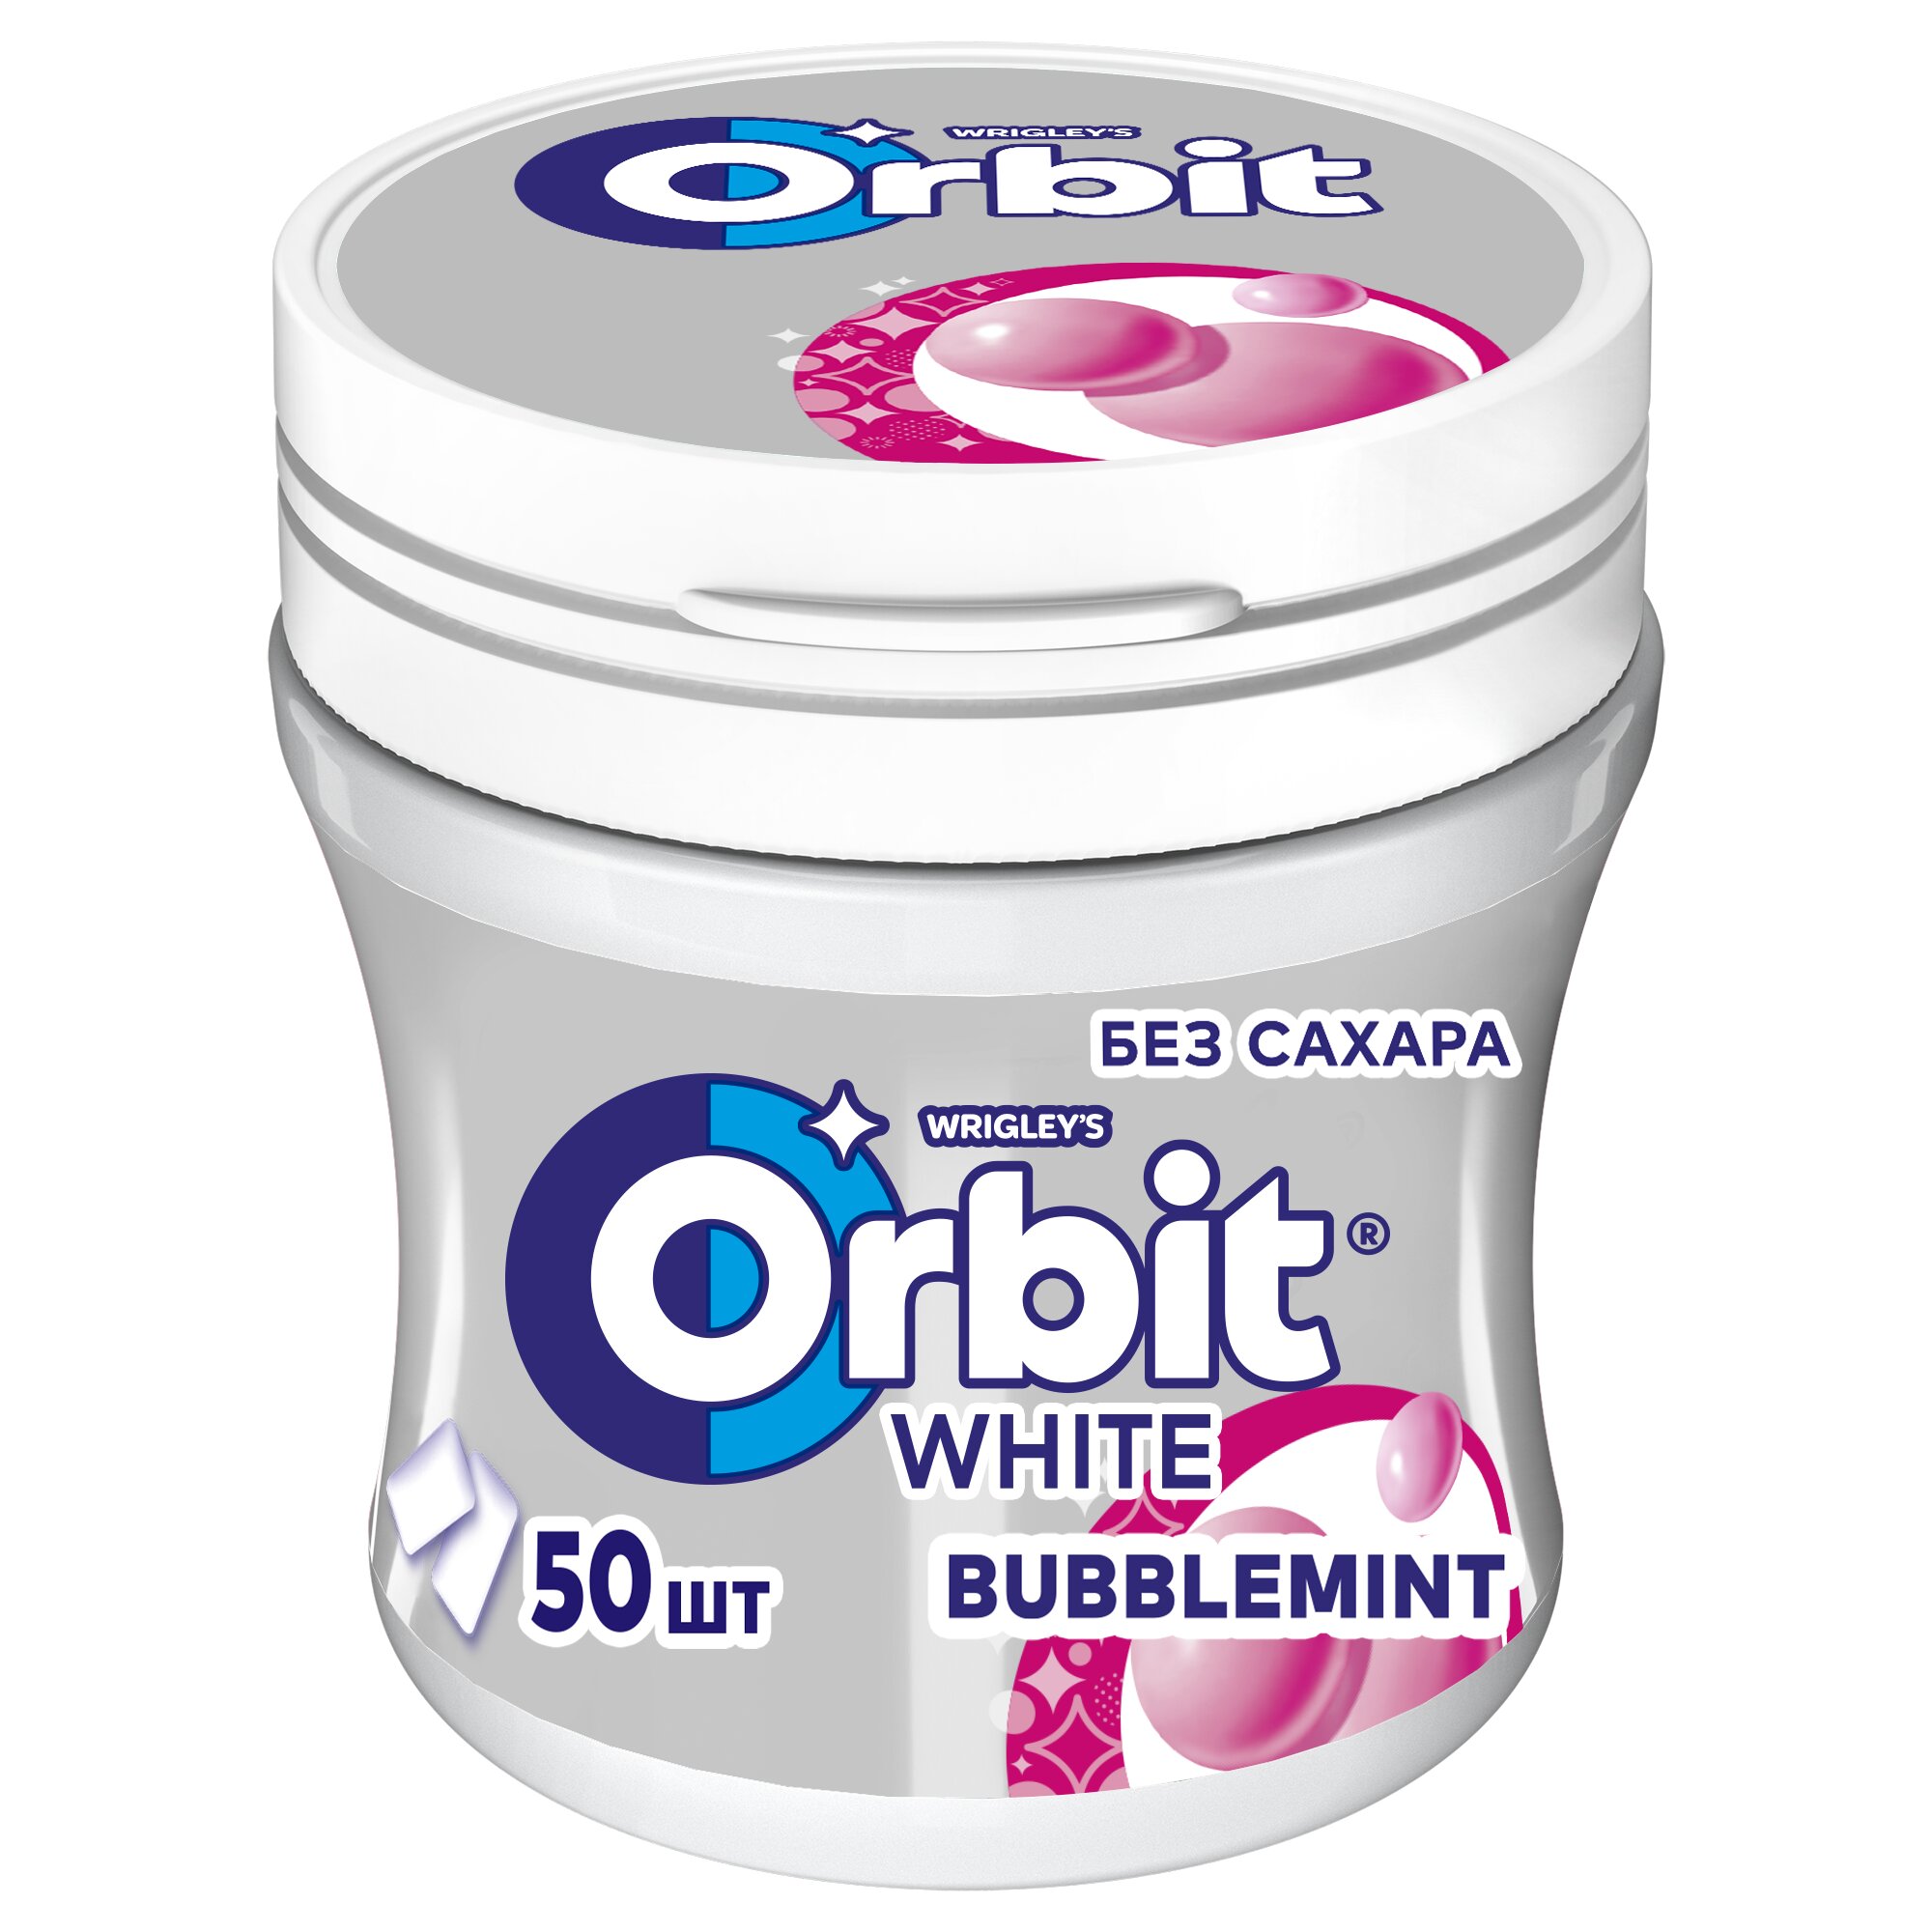 Жевательная резинка Orbit White Bubblemint 68г